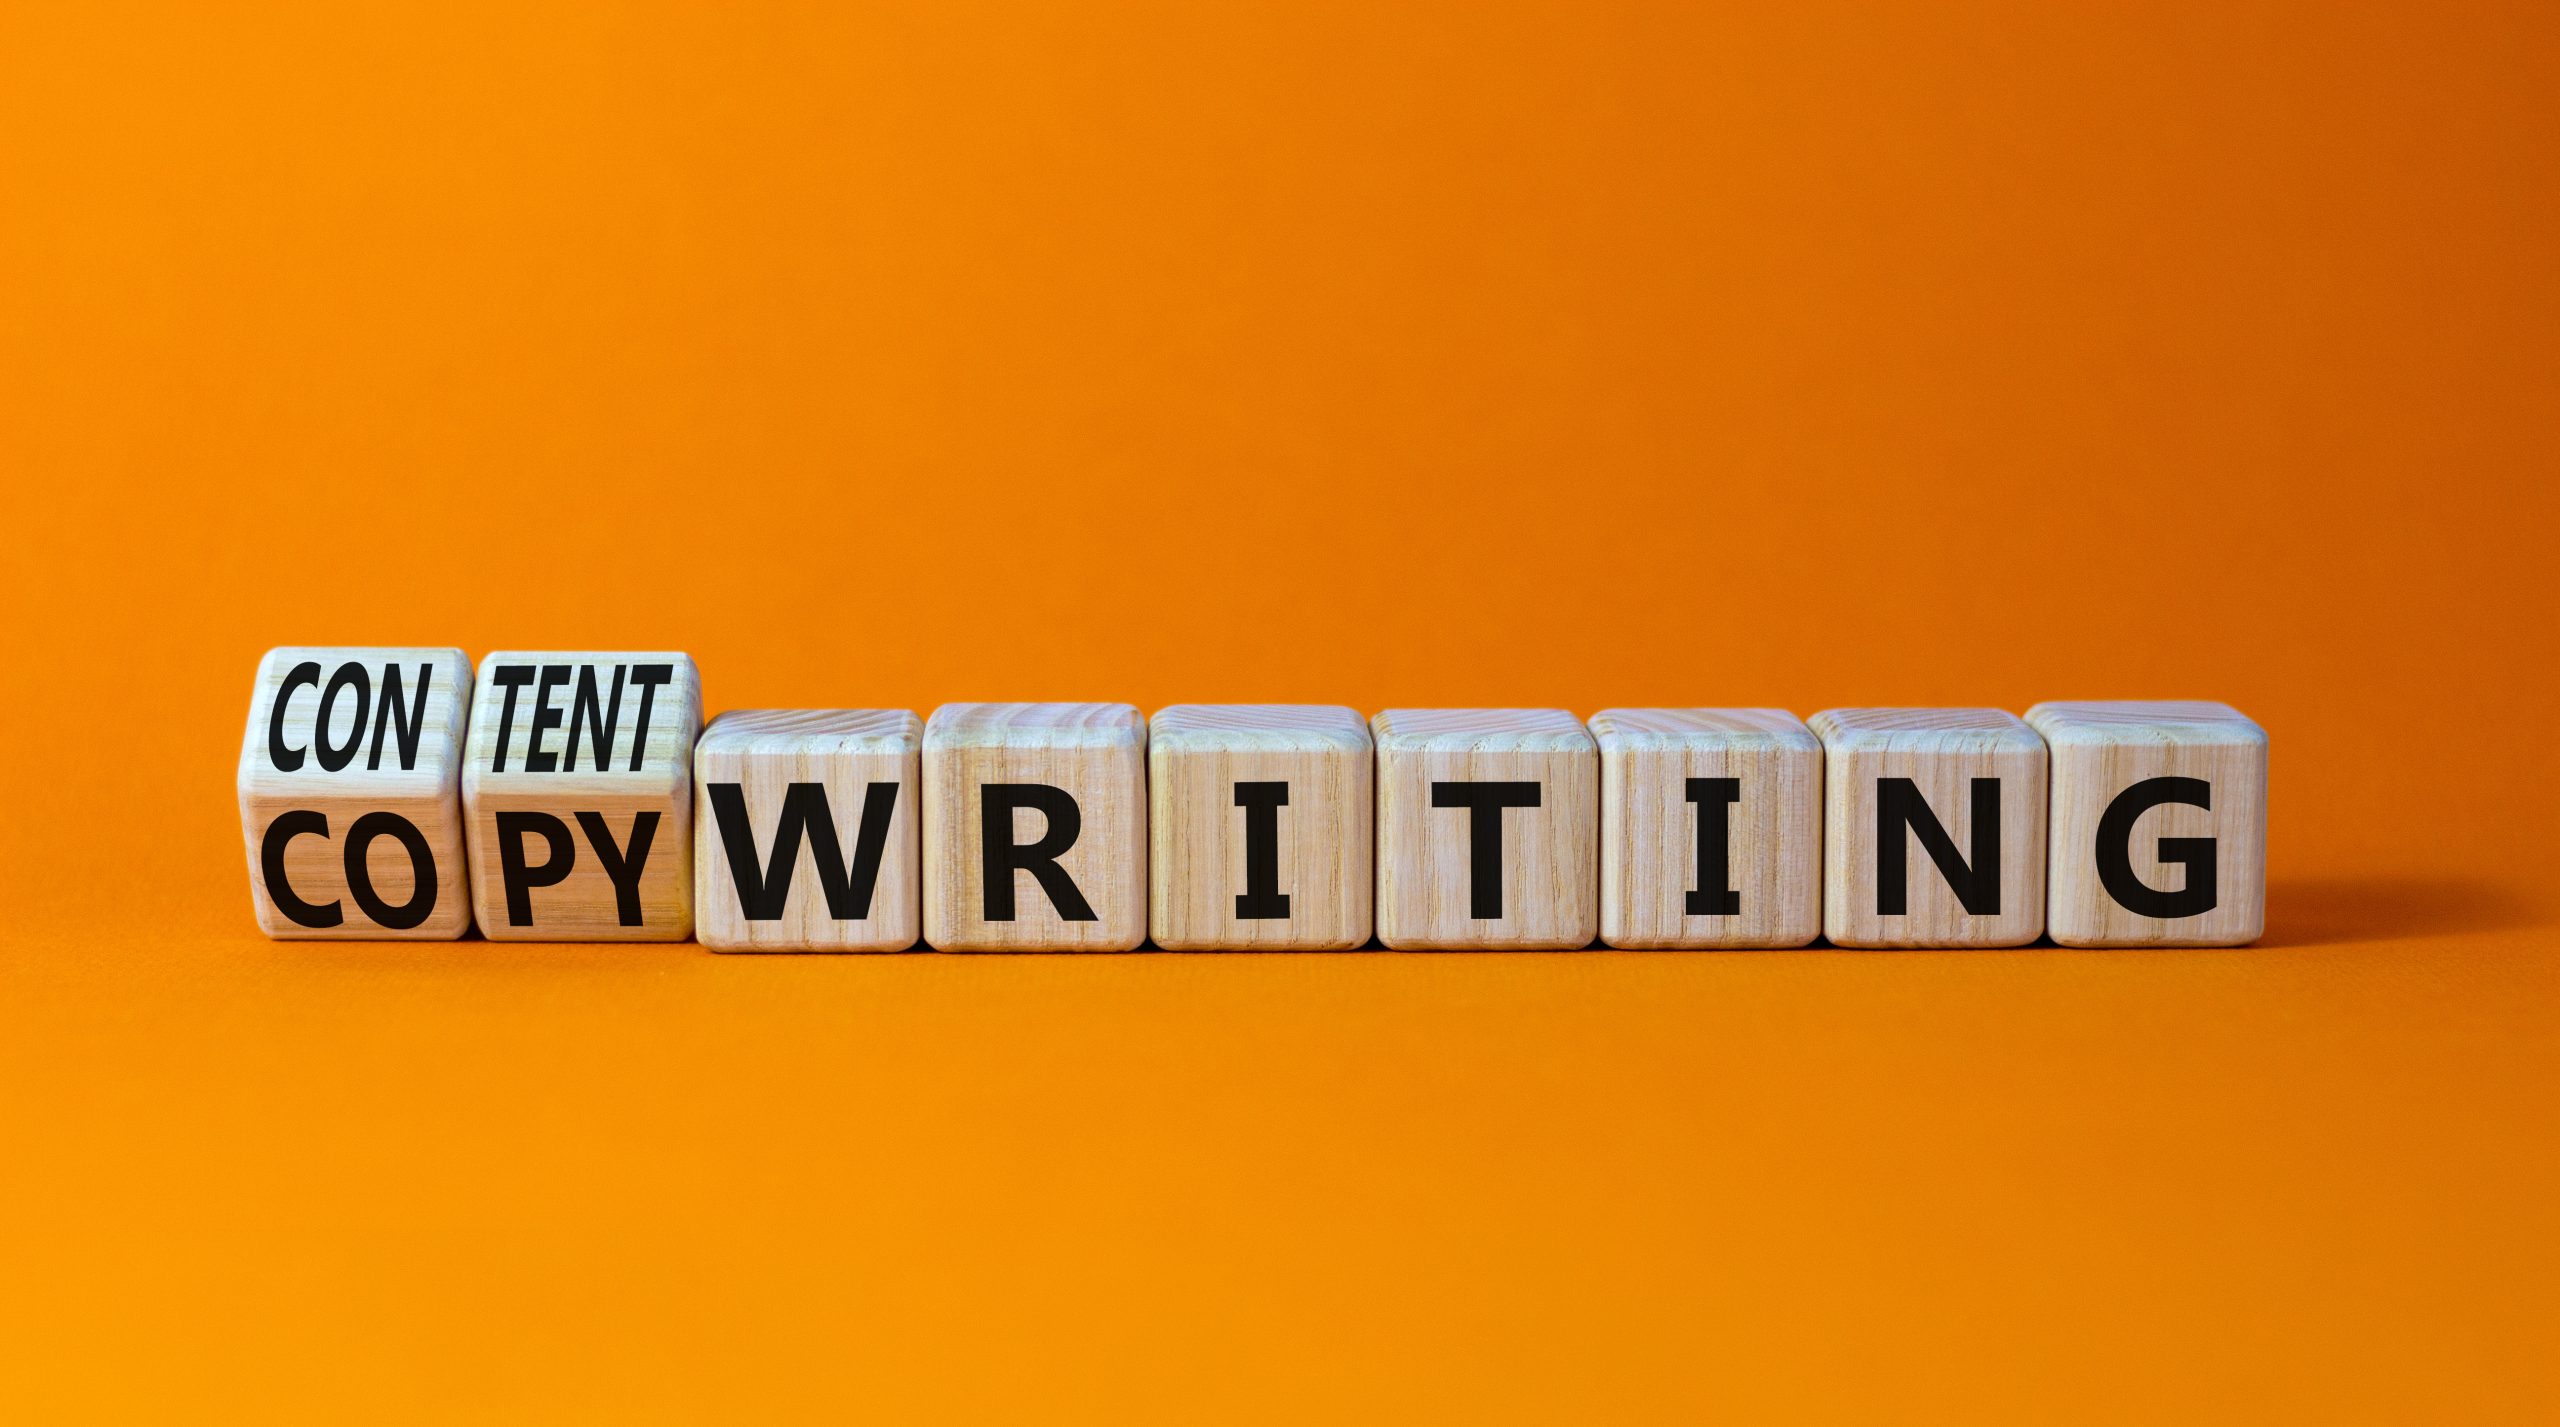 Content writing or copywriting symbol